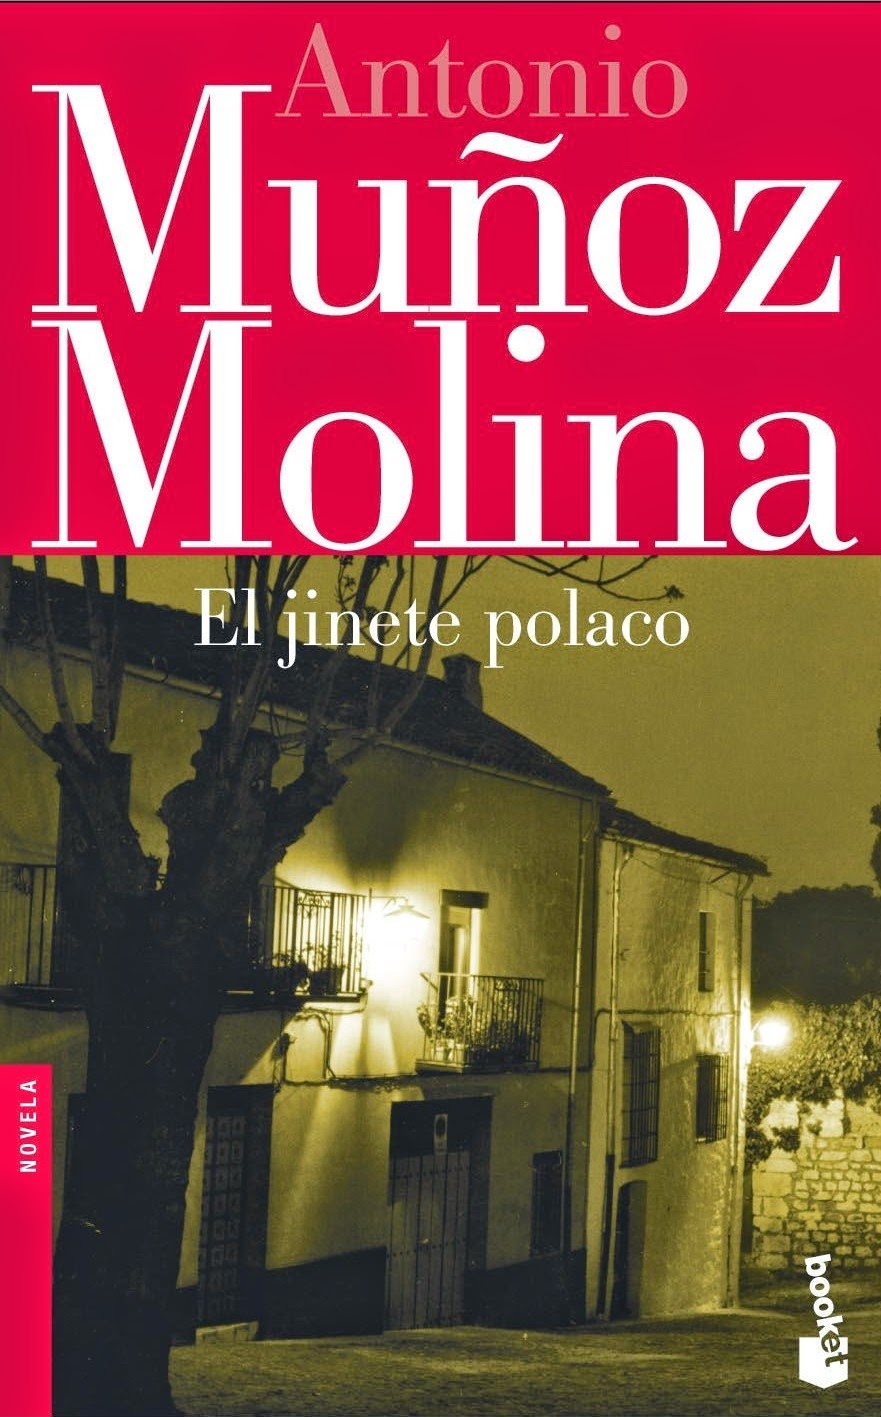 El jinete polaco, de Antonio Muñoz Molina